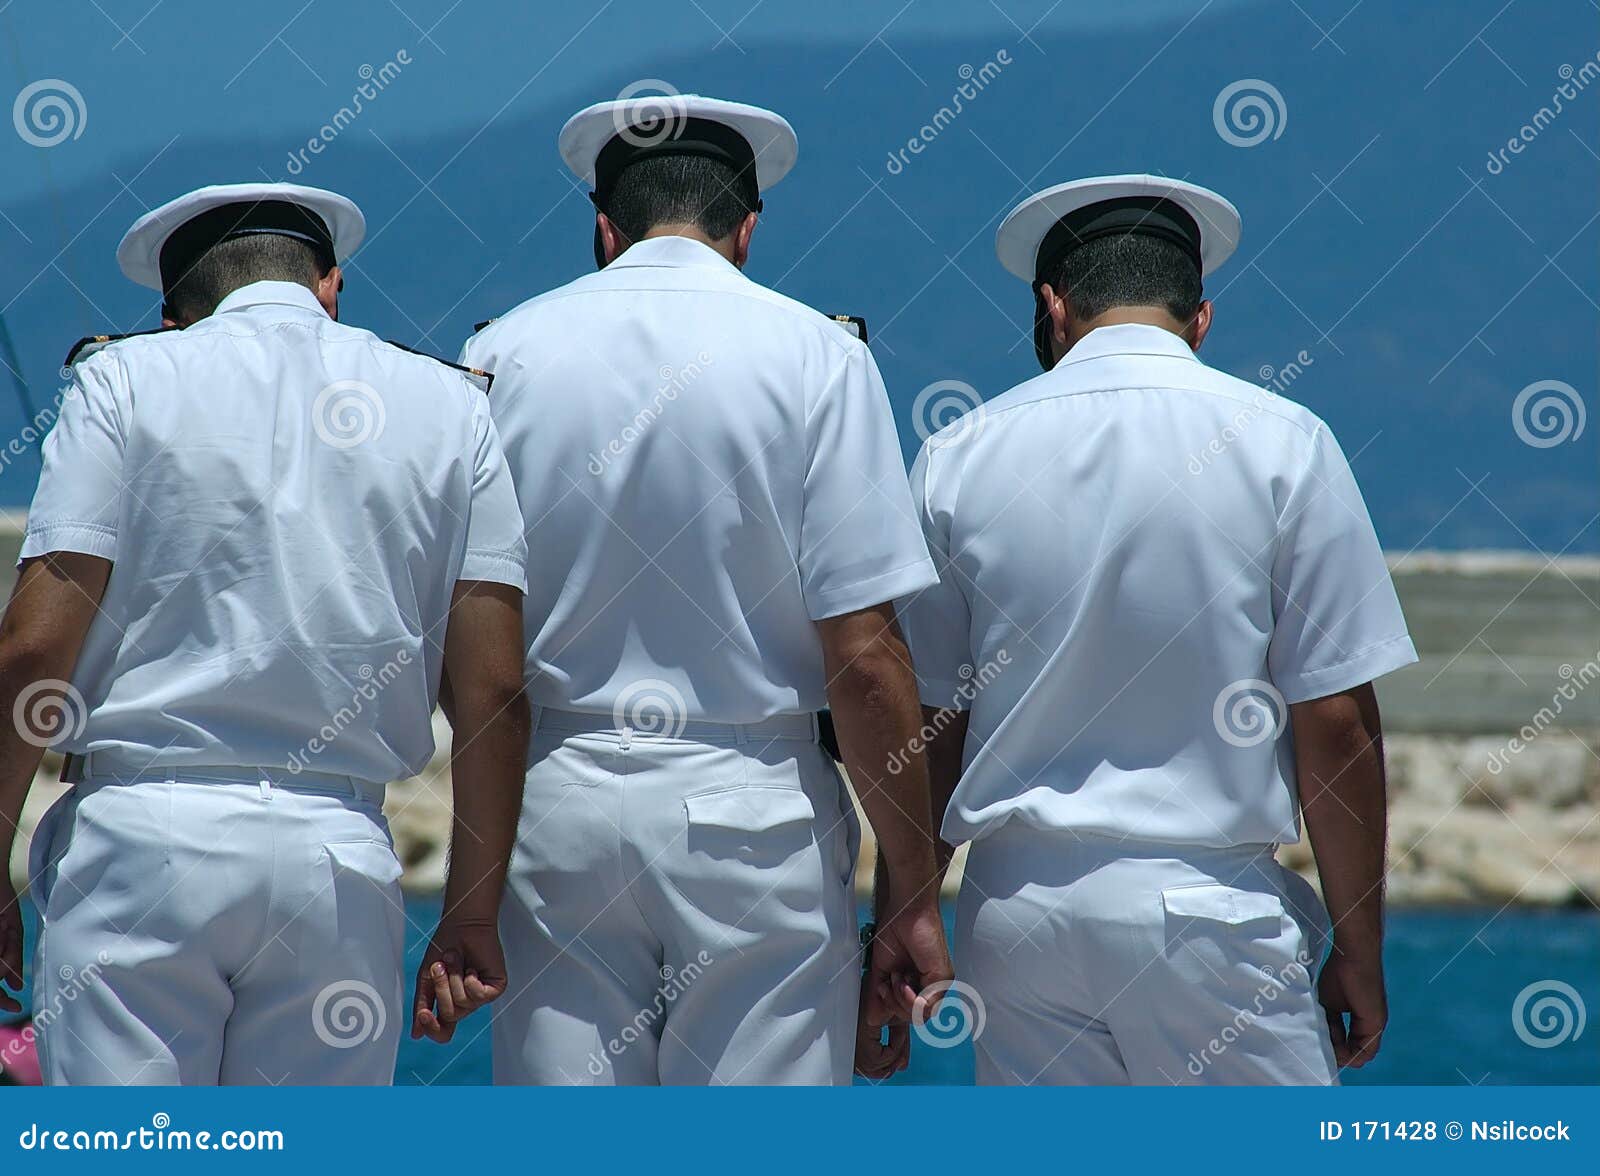 three sailors